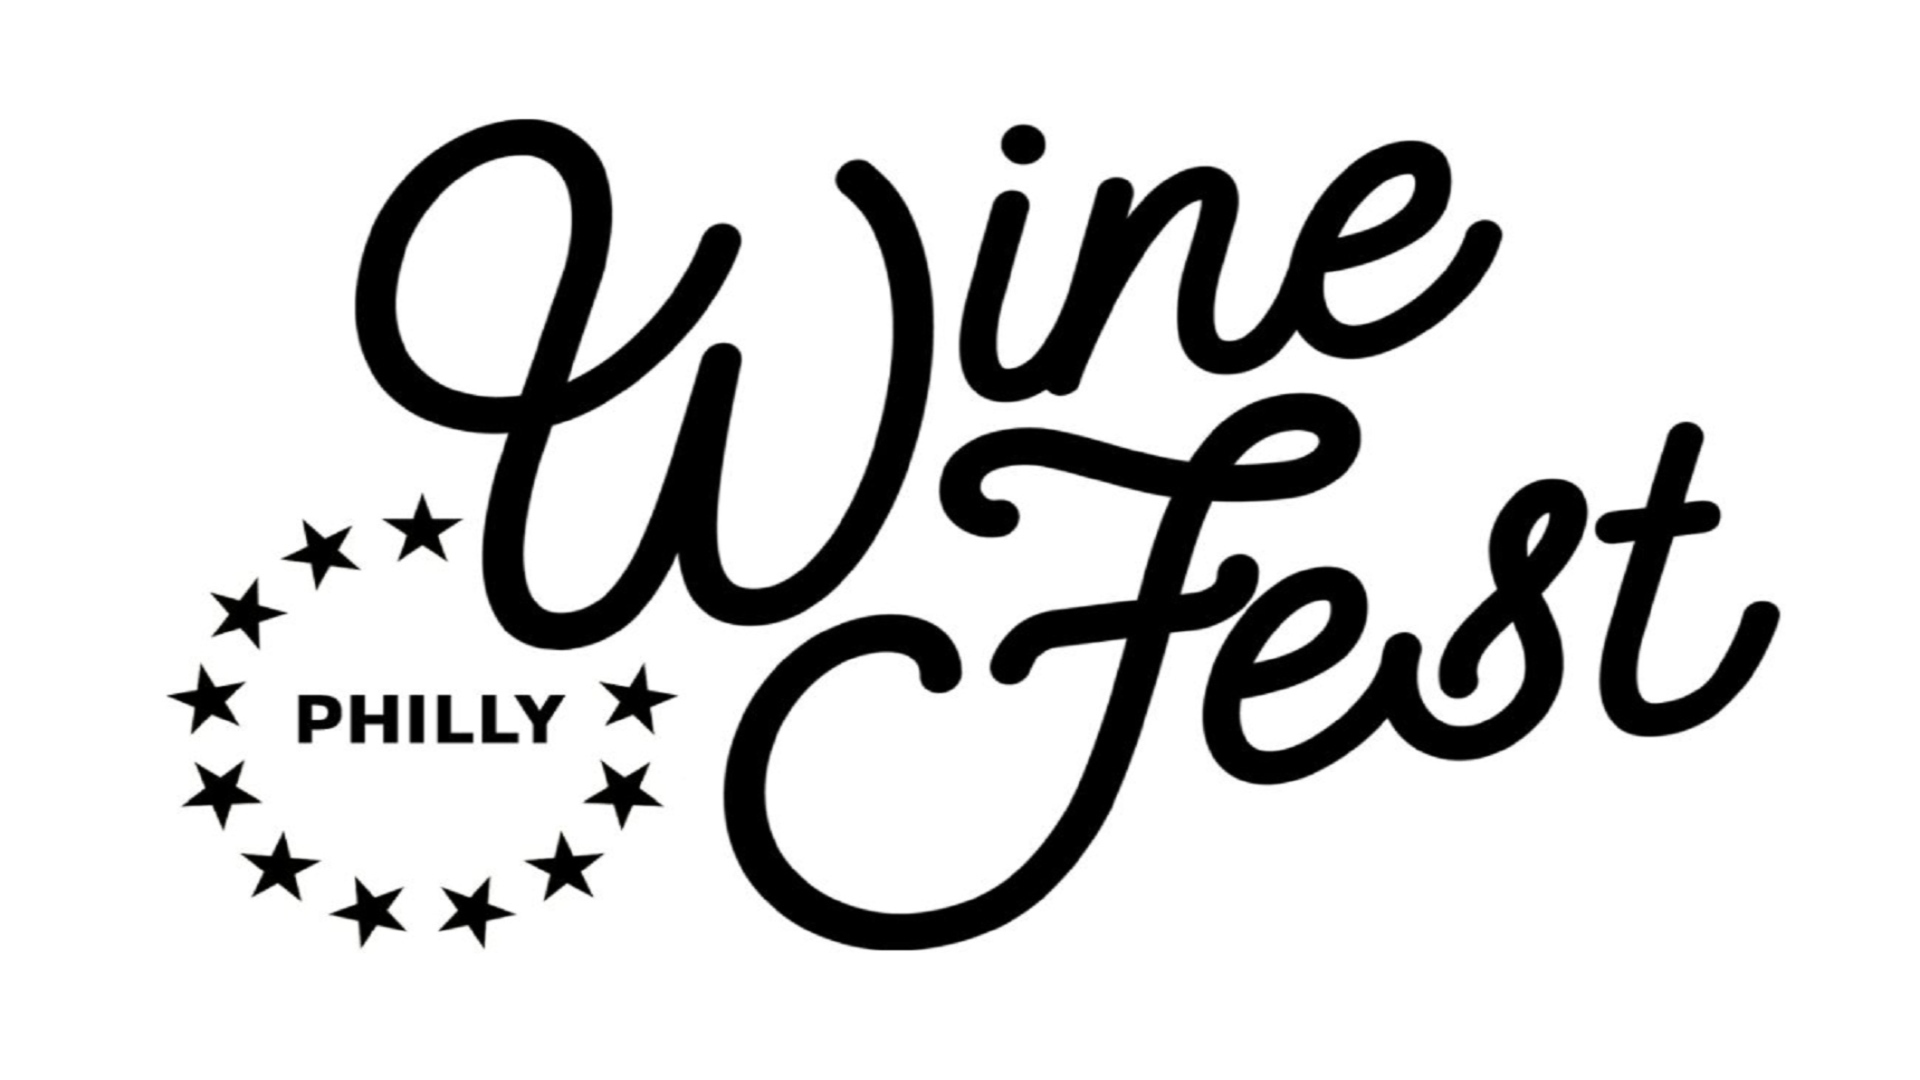 PHILLY WINE FEST, Philadelphia, Pennsylvania, United States